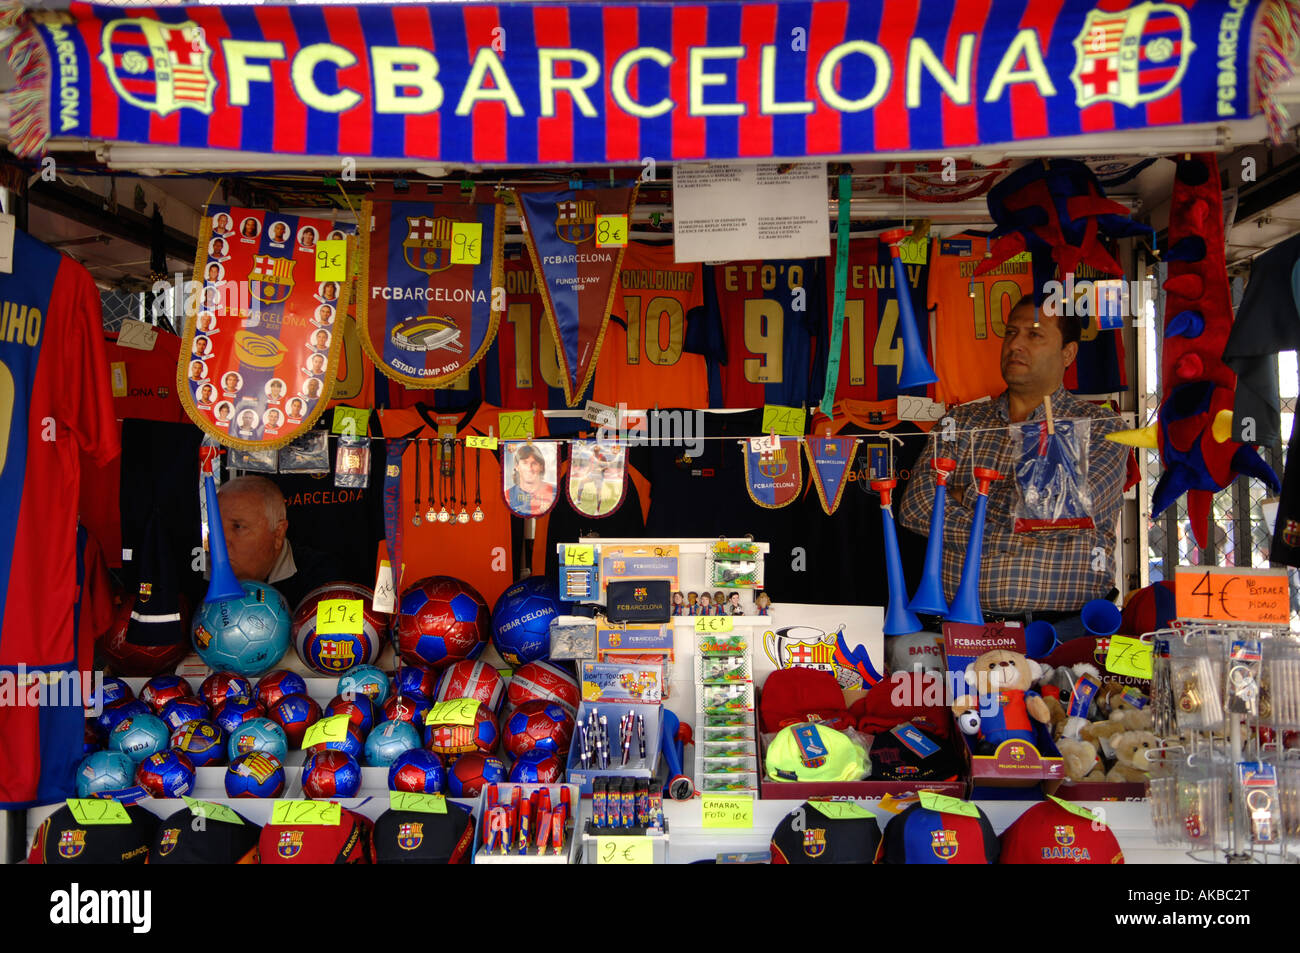 Merchandise Shop of the FC Barcelona Stock Photo: 14947103 - Alamy